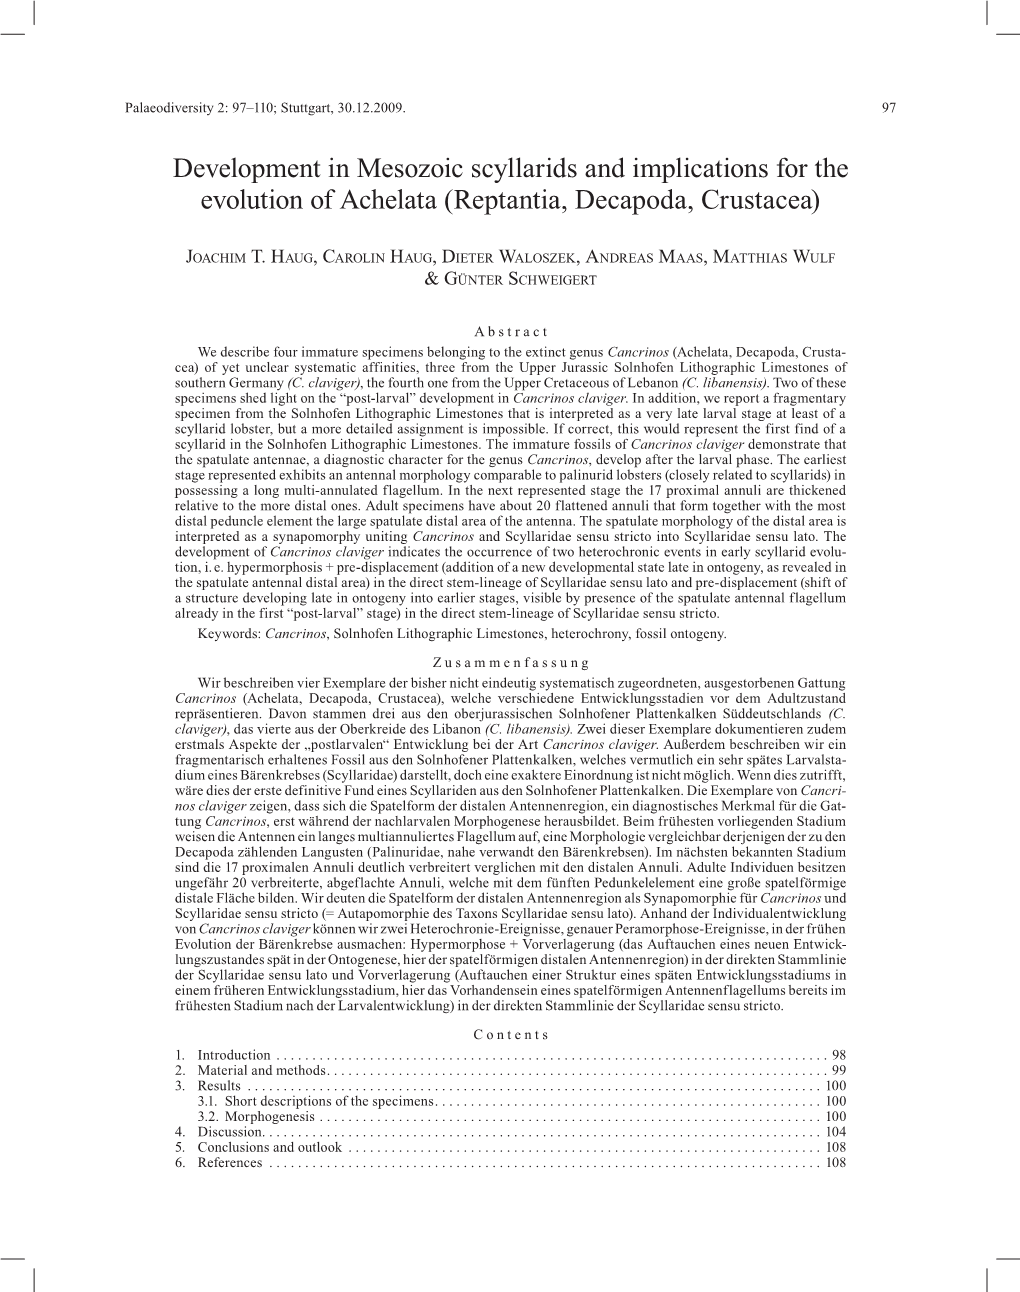 Development in Mesozoic Scyllarids and Implications for the Evolution of Achelata (Reptantia, Decapoda, Crustacea)